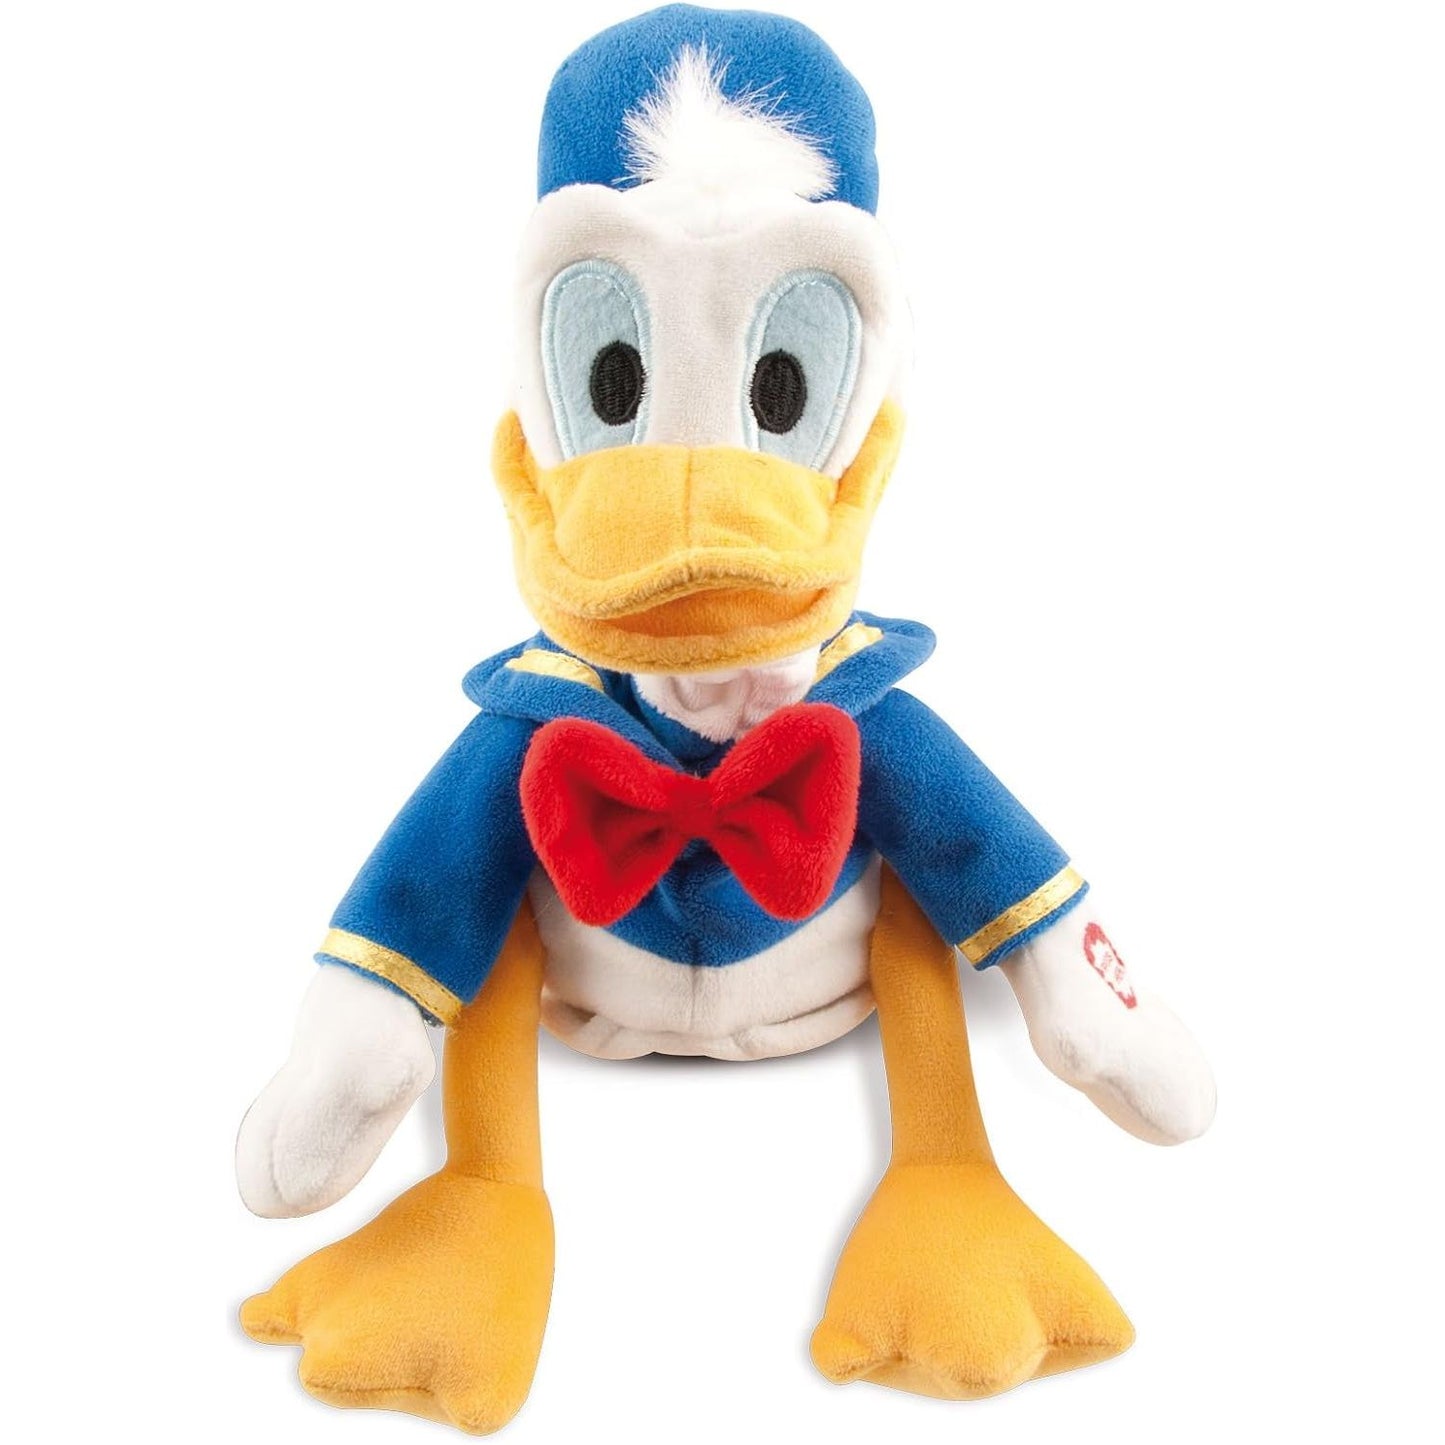 IMC Toys "Quack Quack Donald" Plush Toy